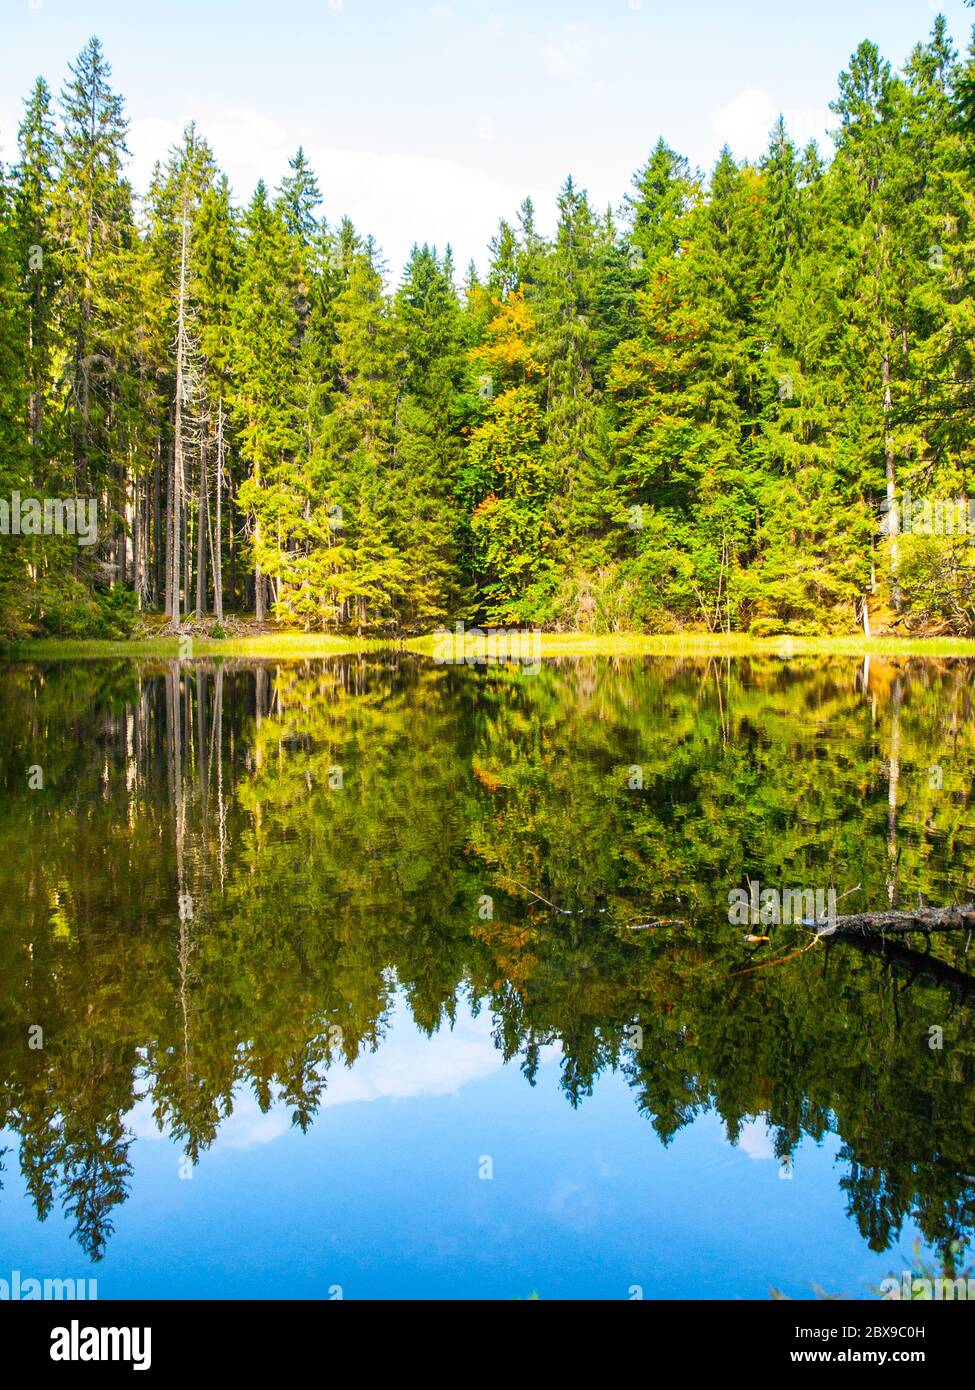 Boubin lake. Reflection of lush green trees of Boubin Primeval Forest, Sumava Mountains, Czech Republic. Stock Photo